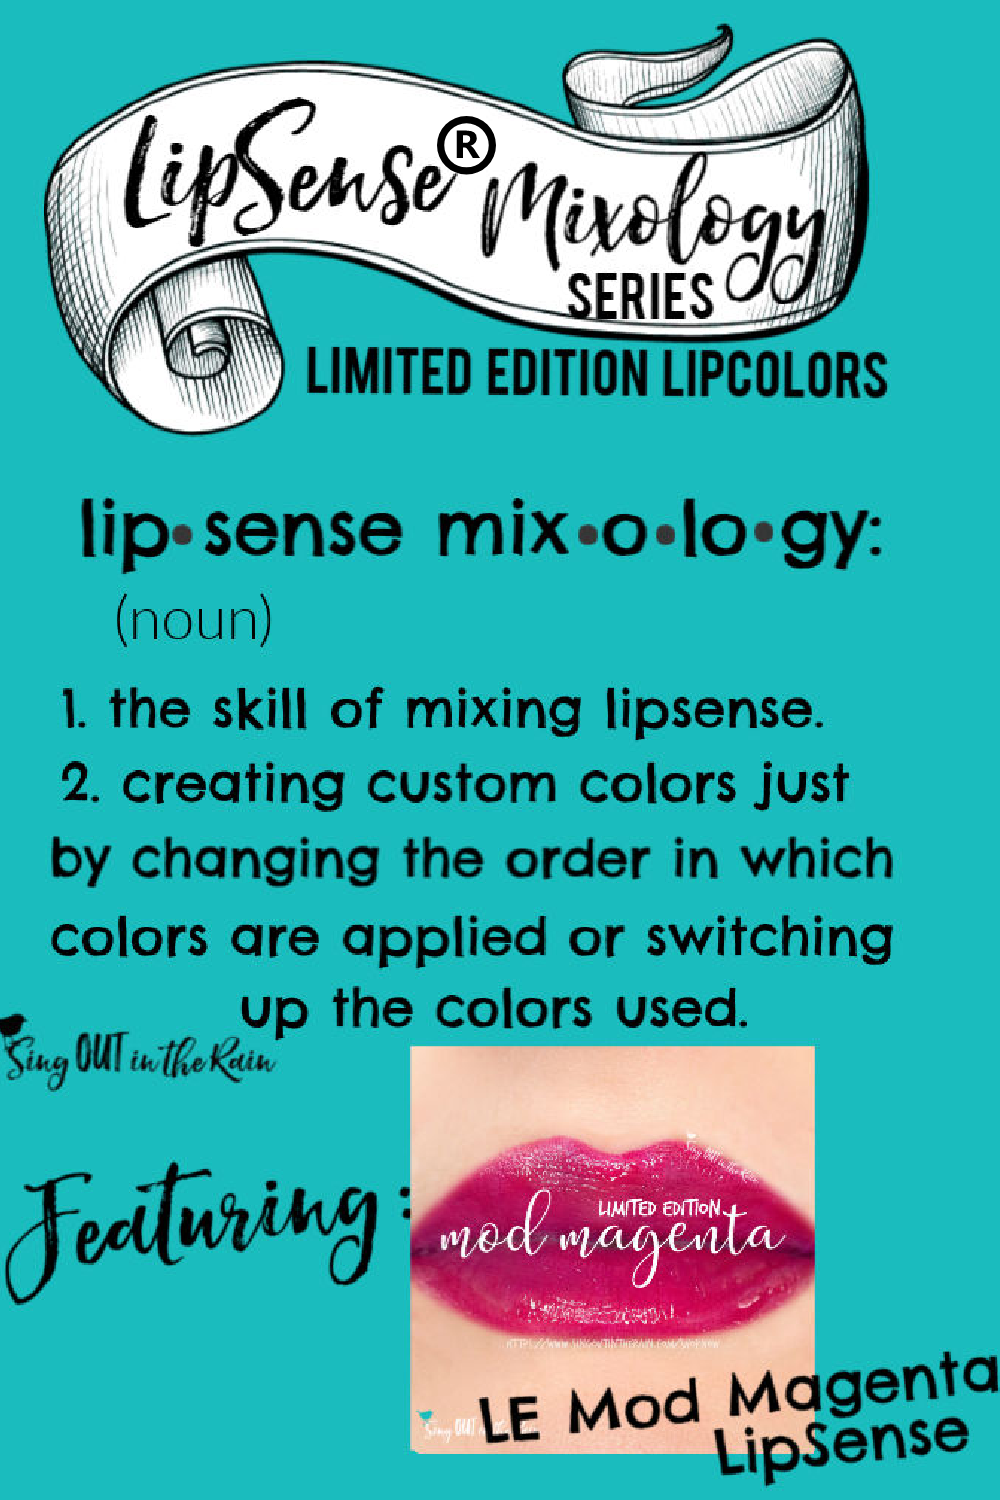 The Ultimate Guide to Mod Magenta LipSense Mixology